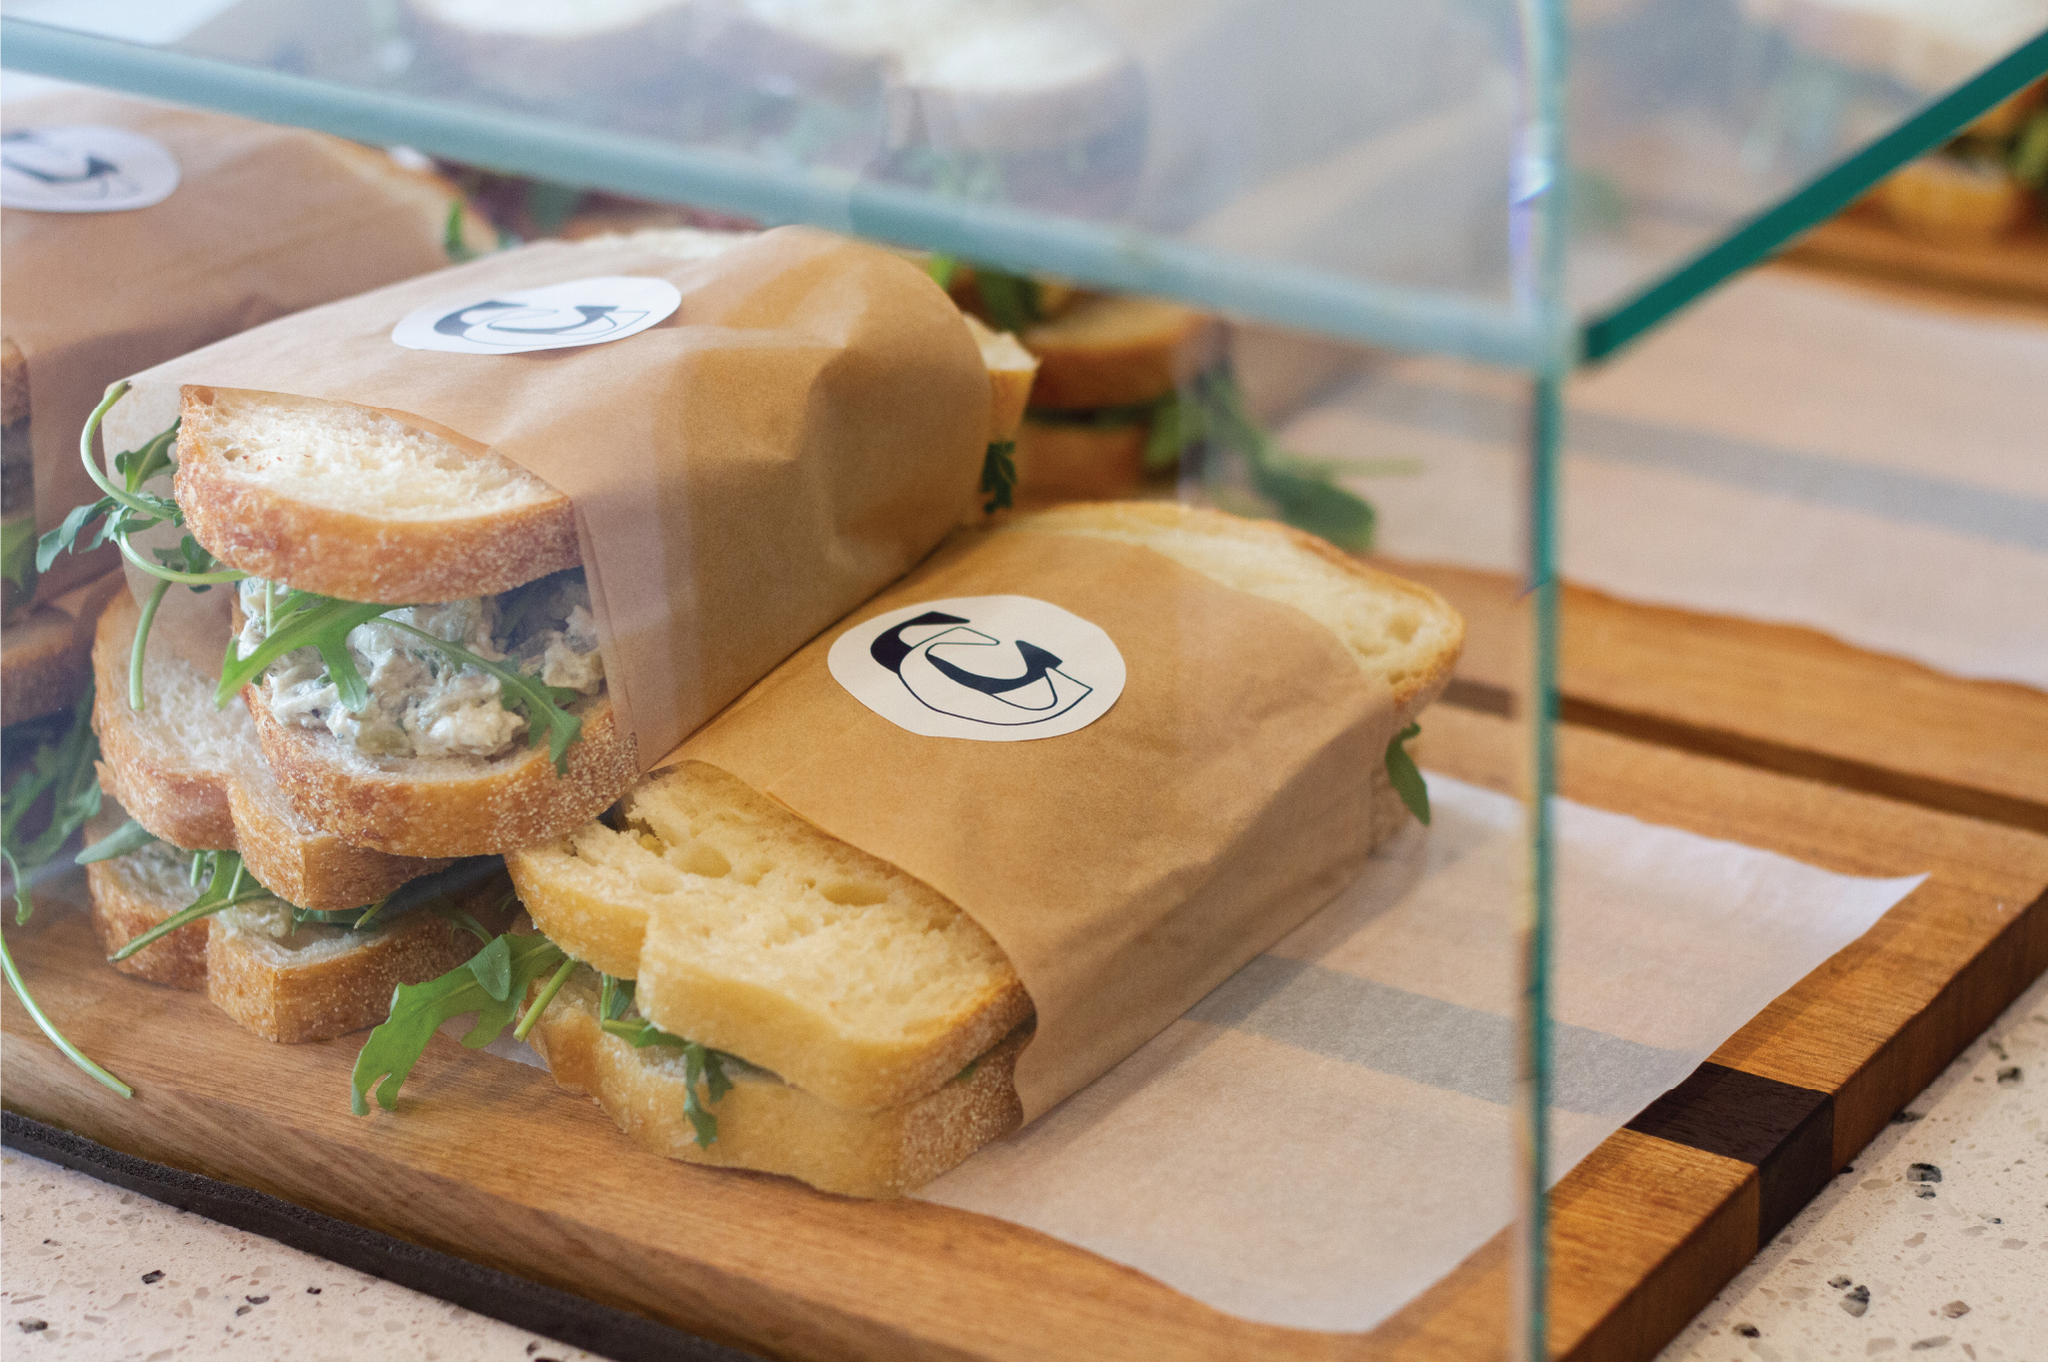 Best sandwiches and lunch options in Ballarat